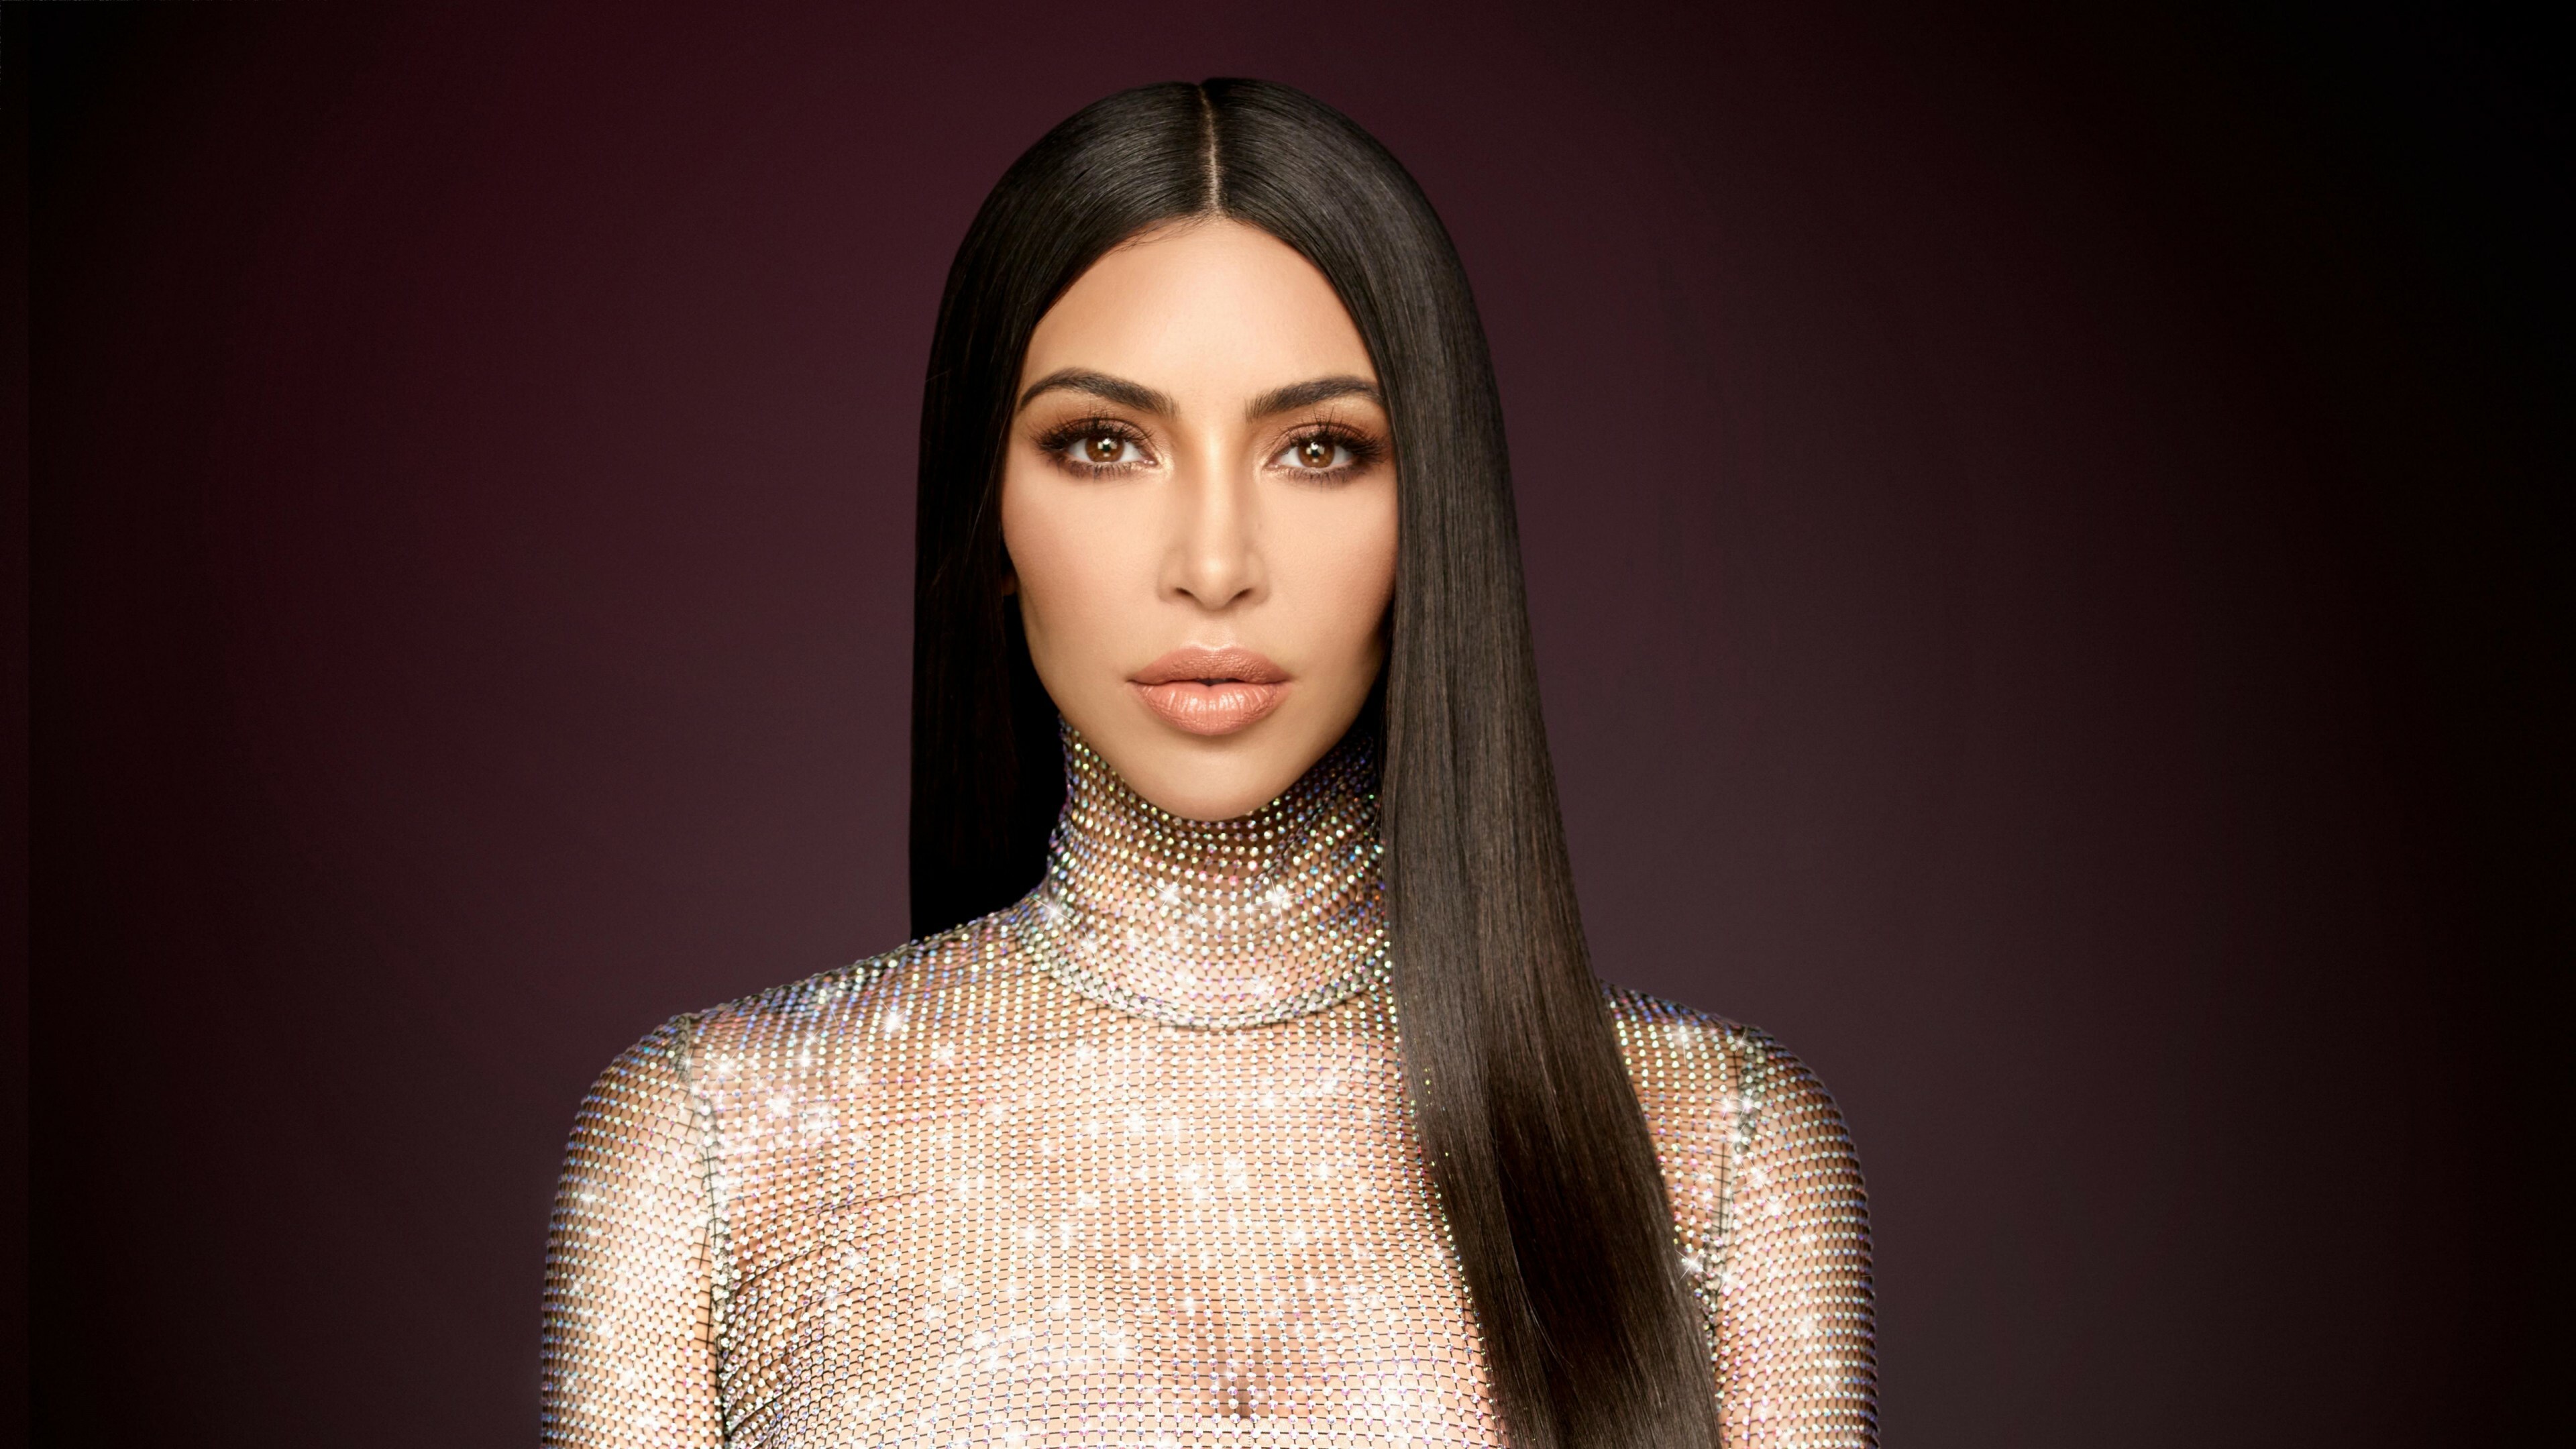 Kim Kardashian: An American socialite, media personality, and businesswoman. 3840x2160 4K Background.